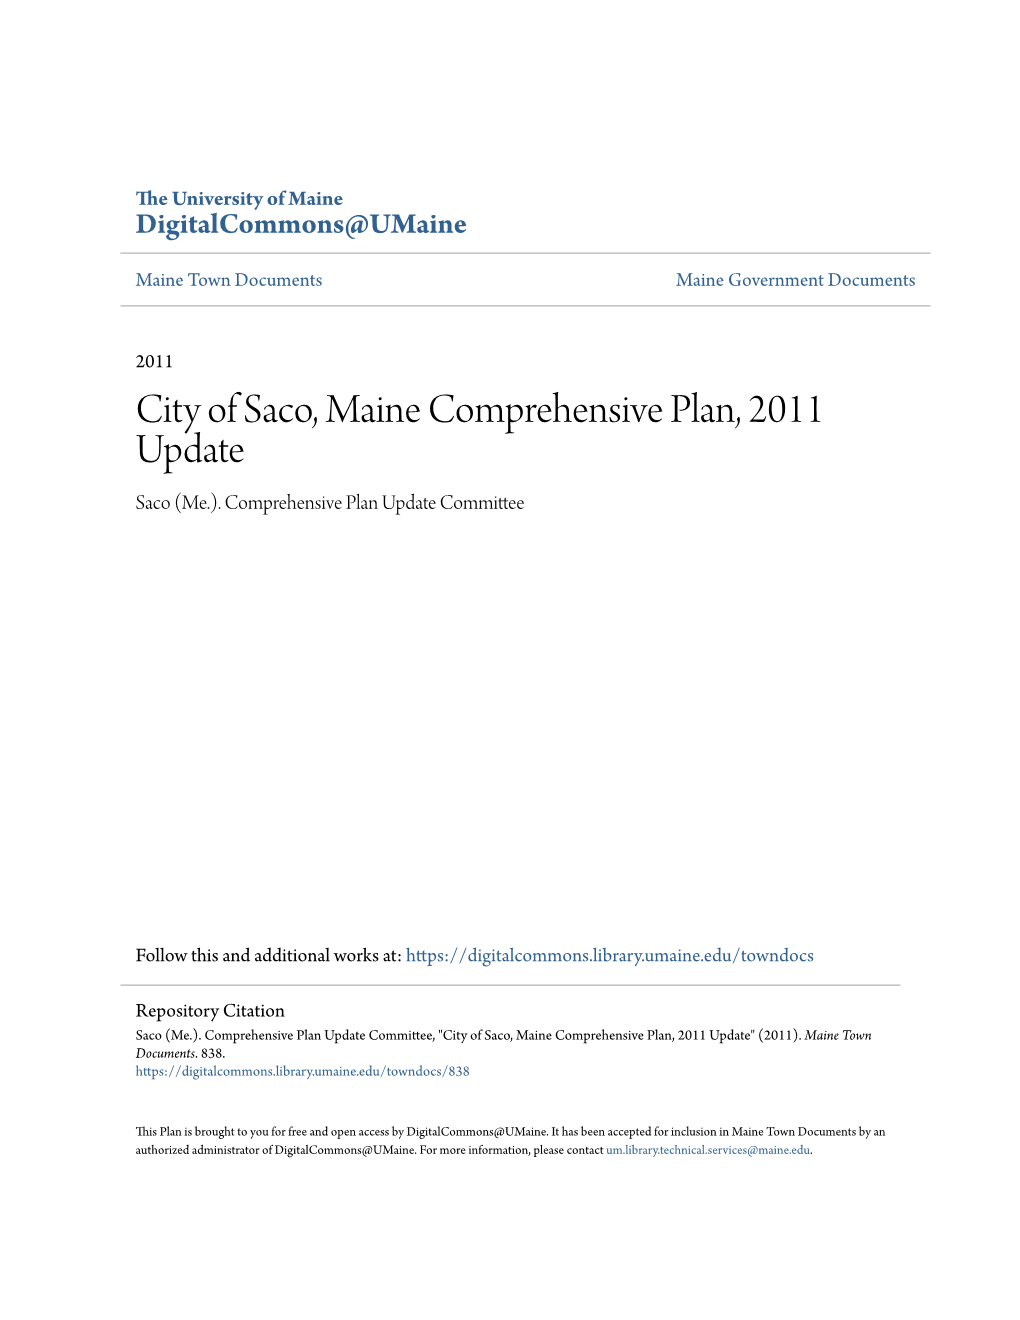 City of Saco, Maine Comprehensive Plan, 2011 Update Saco (Me.)